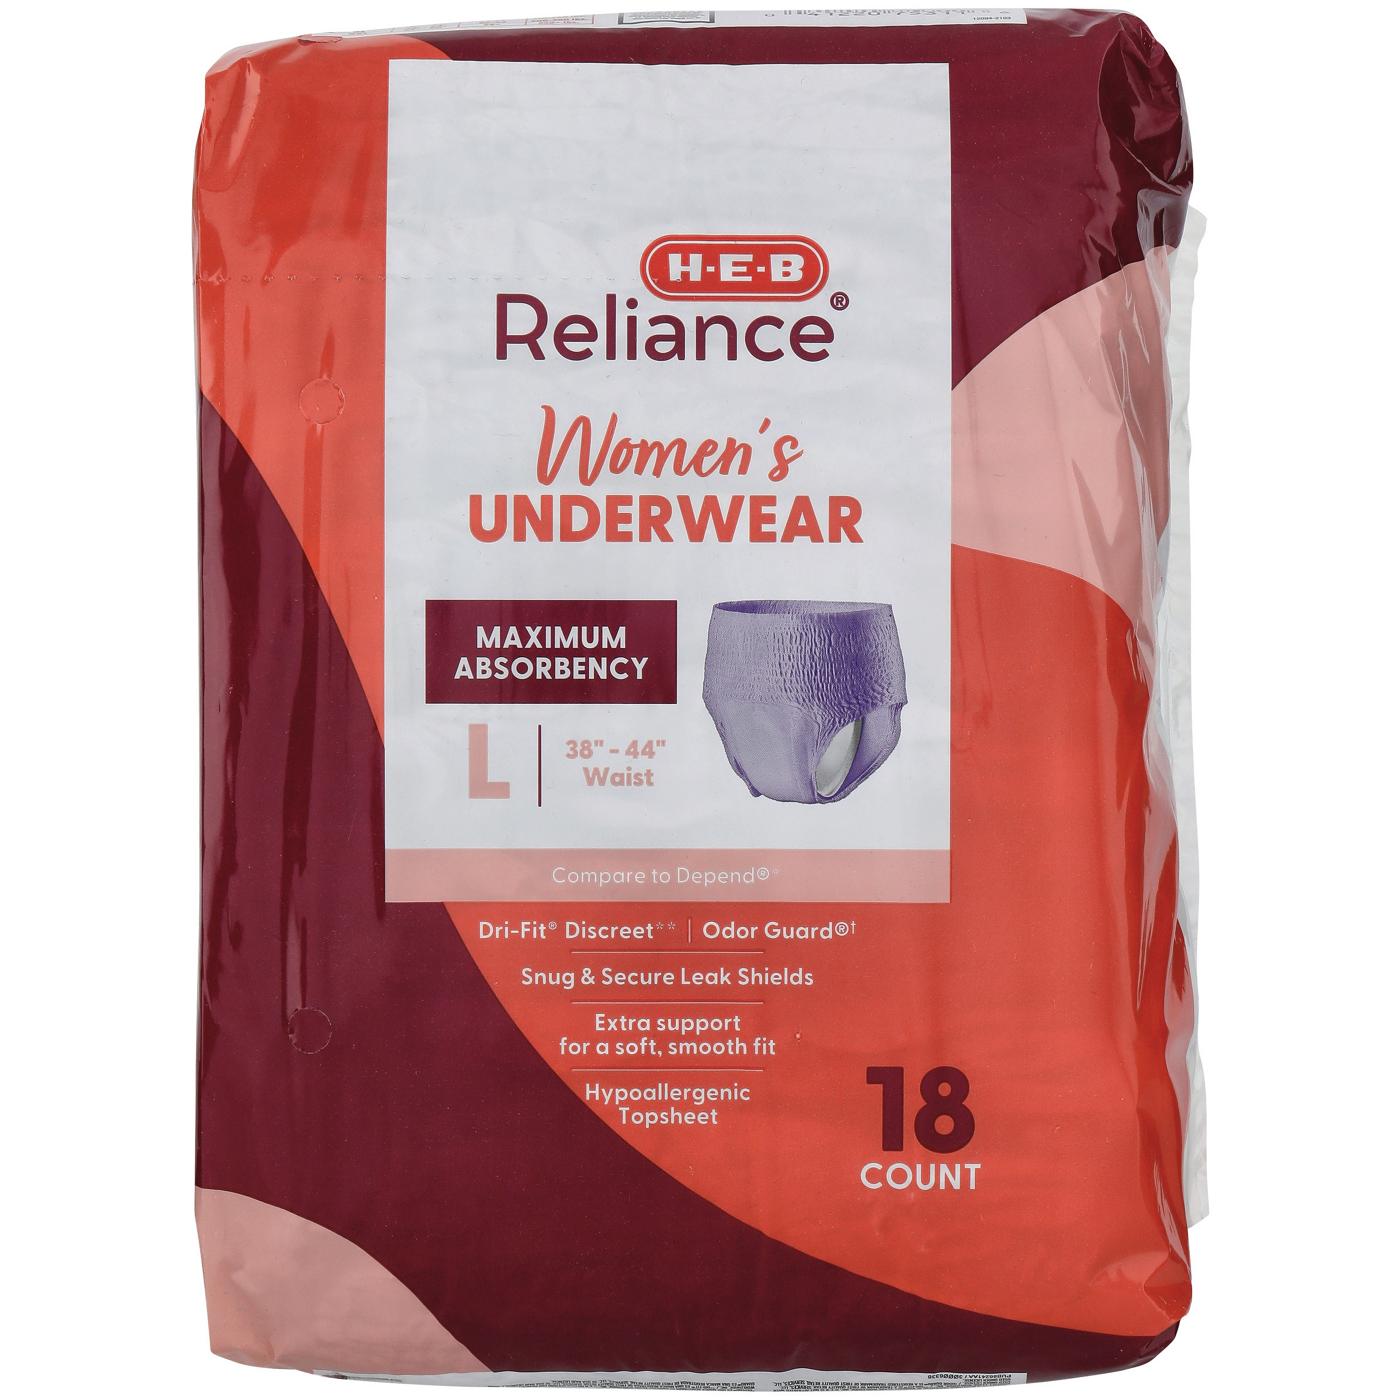 H-E-B Reliance Women's Underwear Large; image 1 of 8